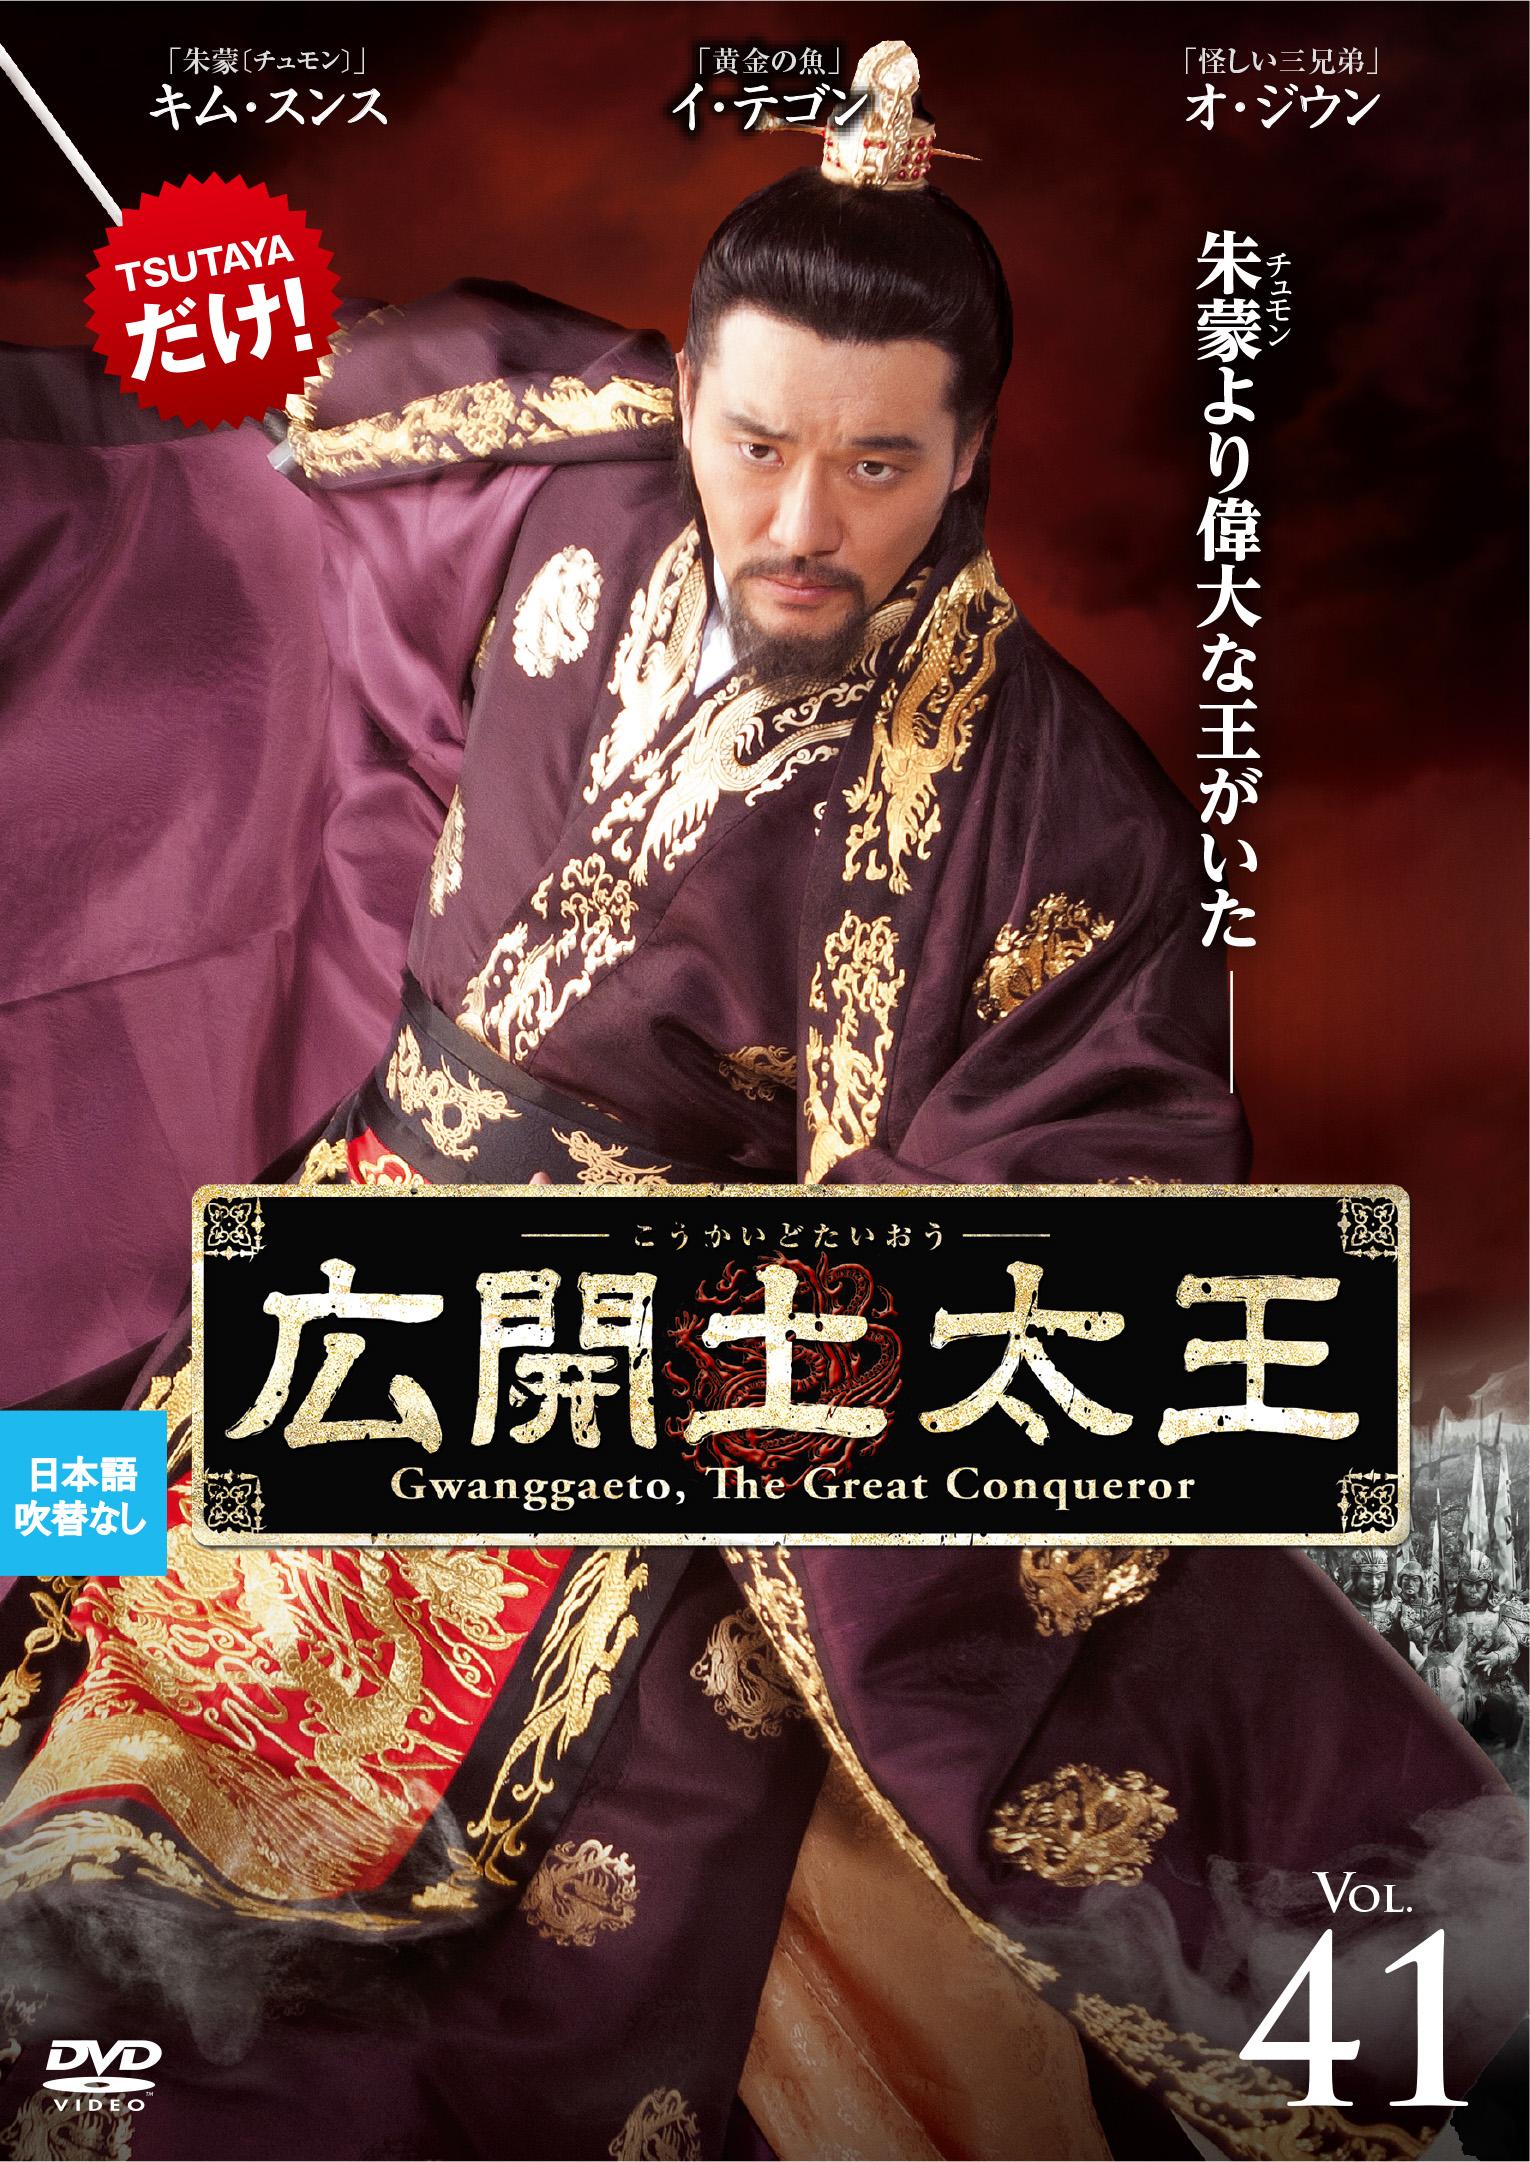 King Gwanggaeto